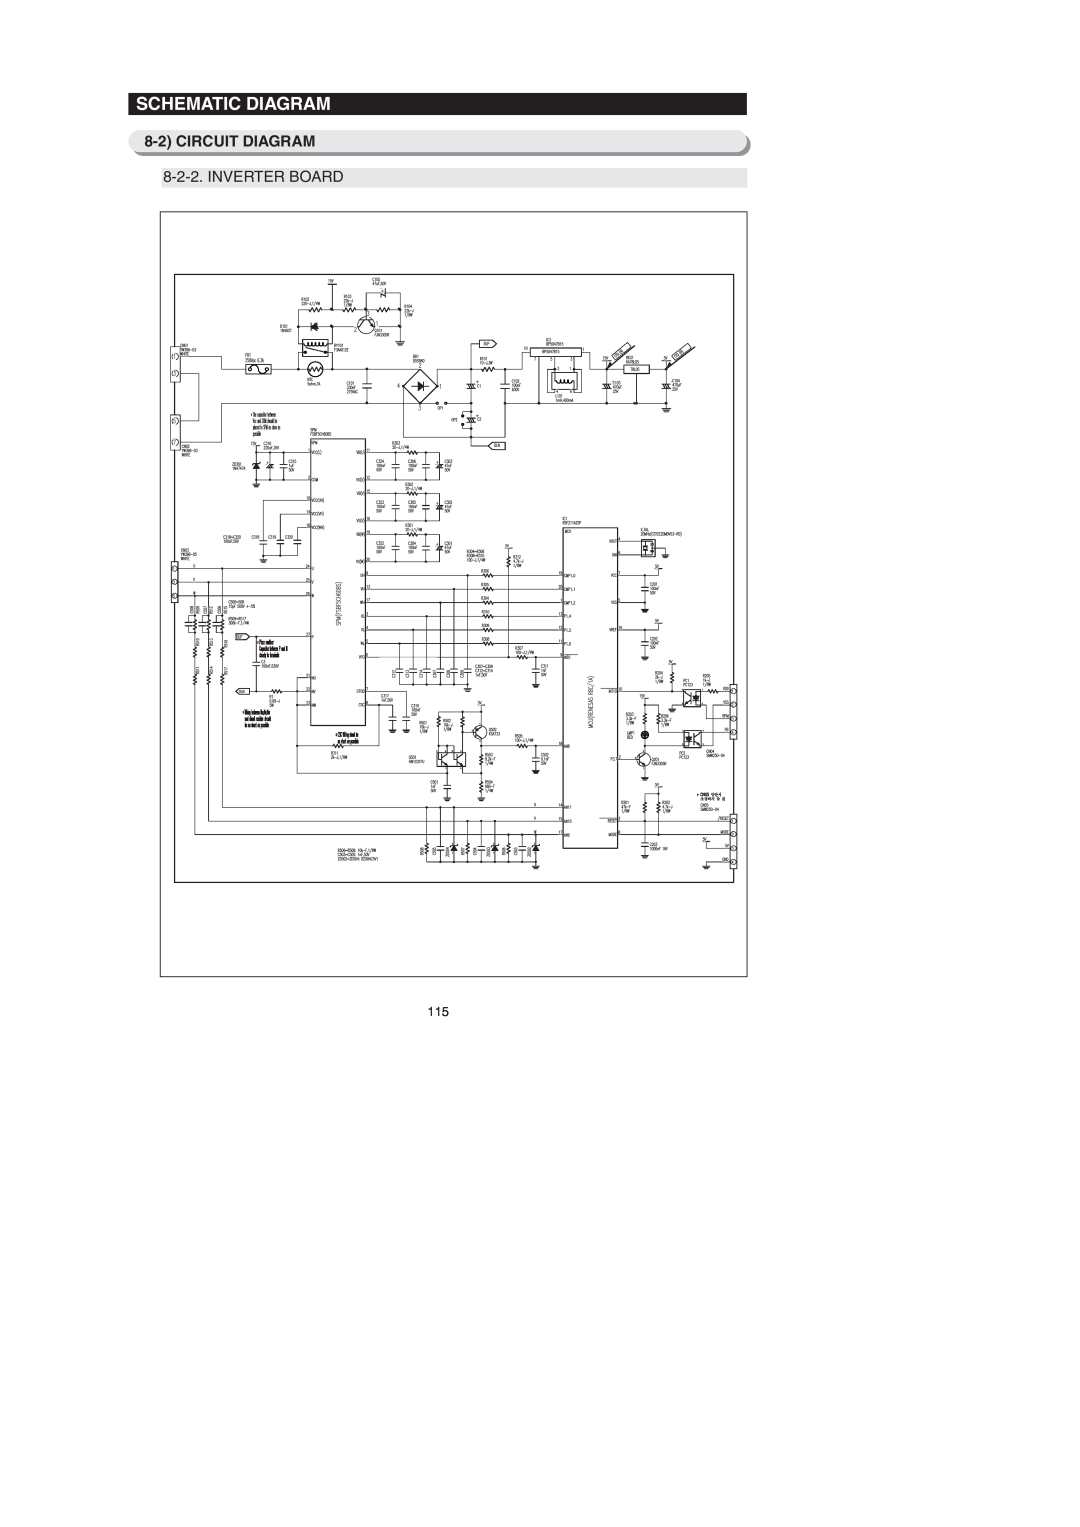 Samsung RF267AERS, RF267AEBP, RF267AE**, RF26XAERS, RF26XAEPN, RF26XAE** Schematic Diagram, Circuit Diagram, Inverter Board 